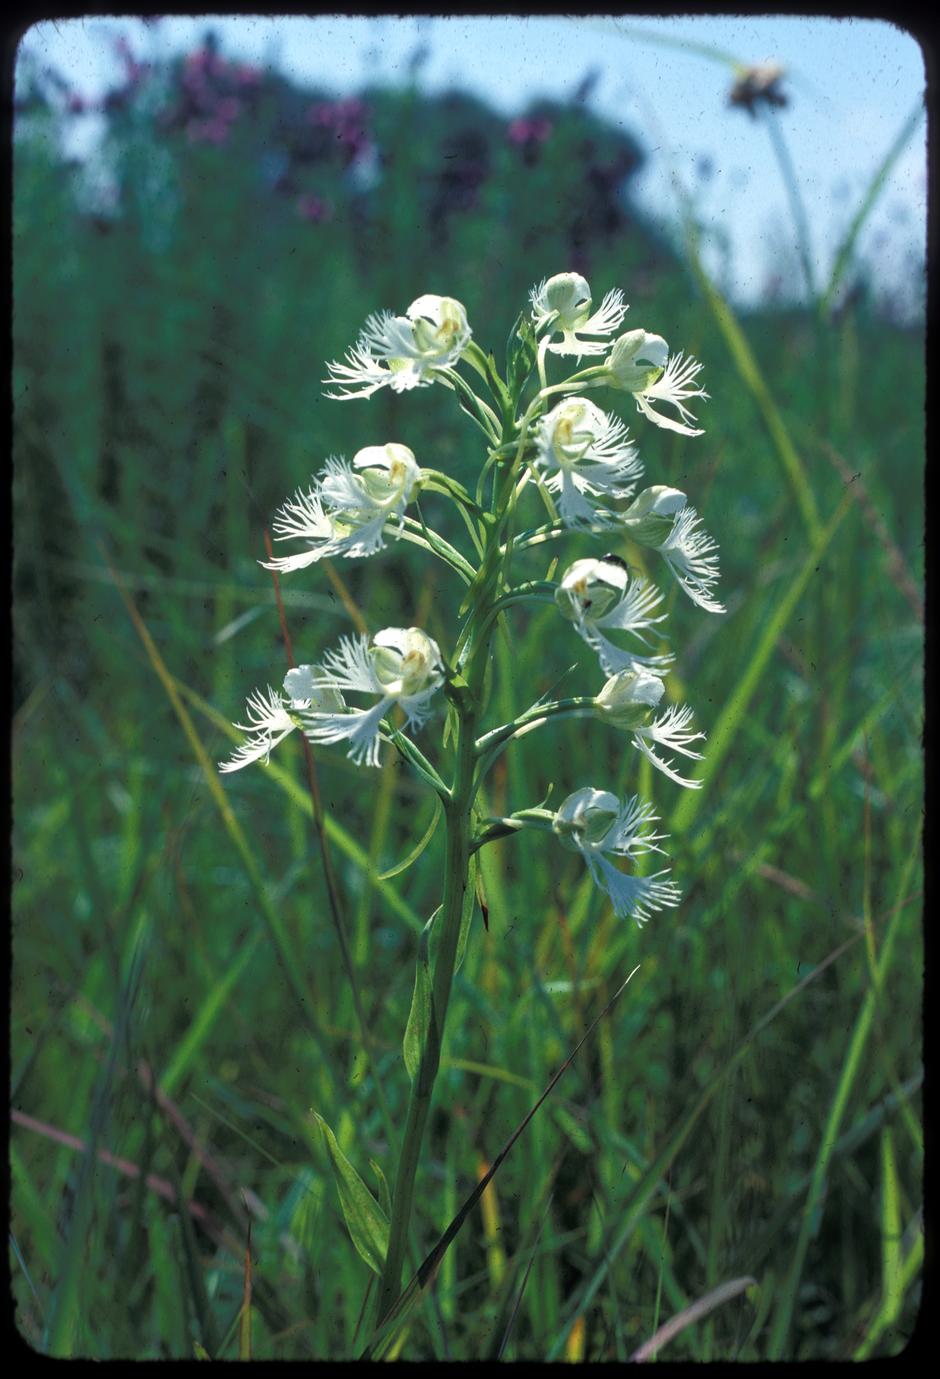 Habenaria leucophaea in bloom at Faville Prairie, State Natural Area